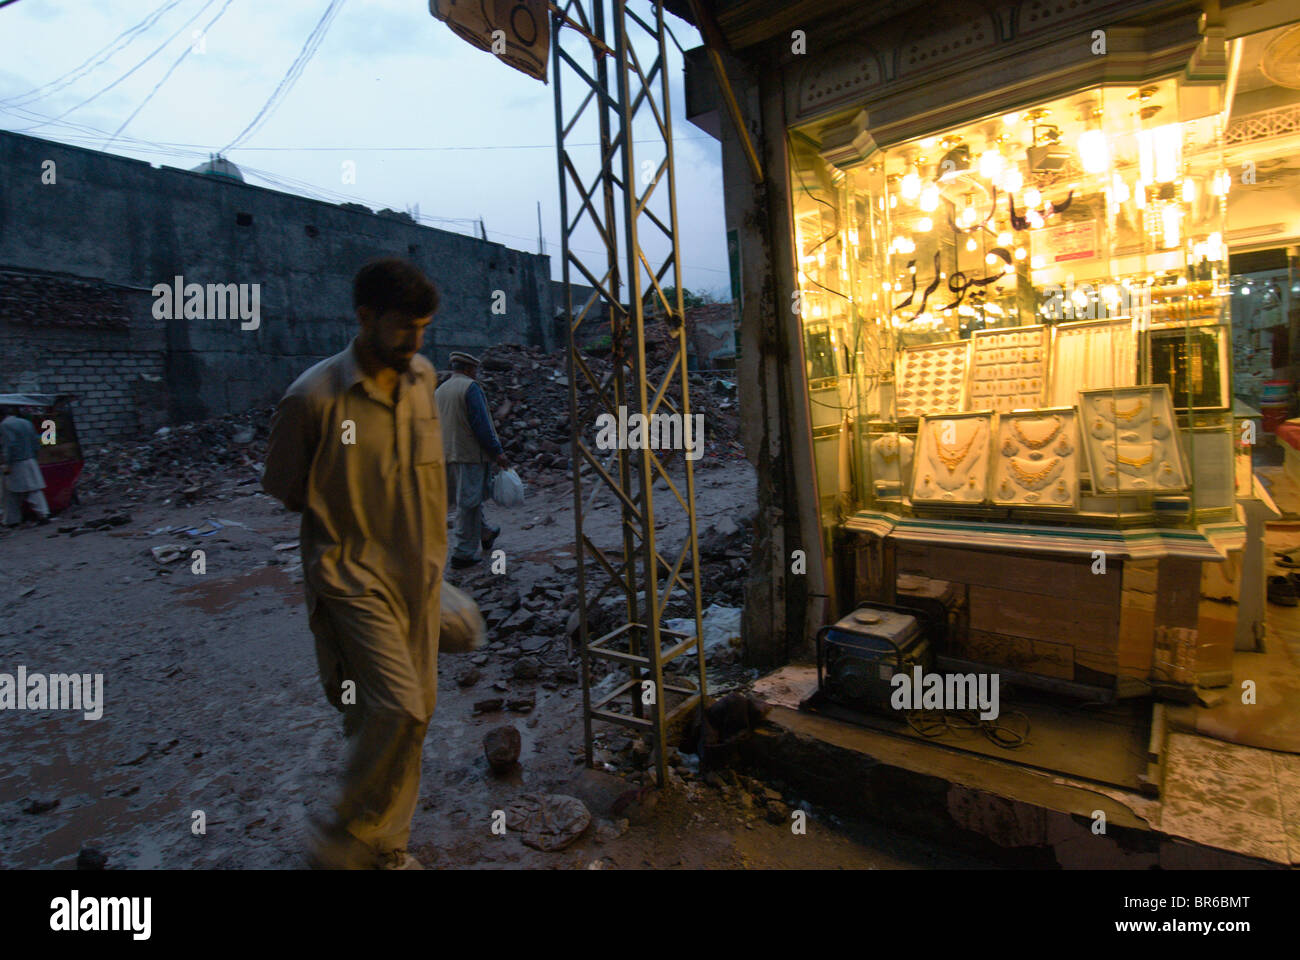 A man walks past a store amidst rubble Muzaffarabad Pakistan Stock Photo